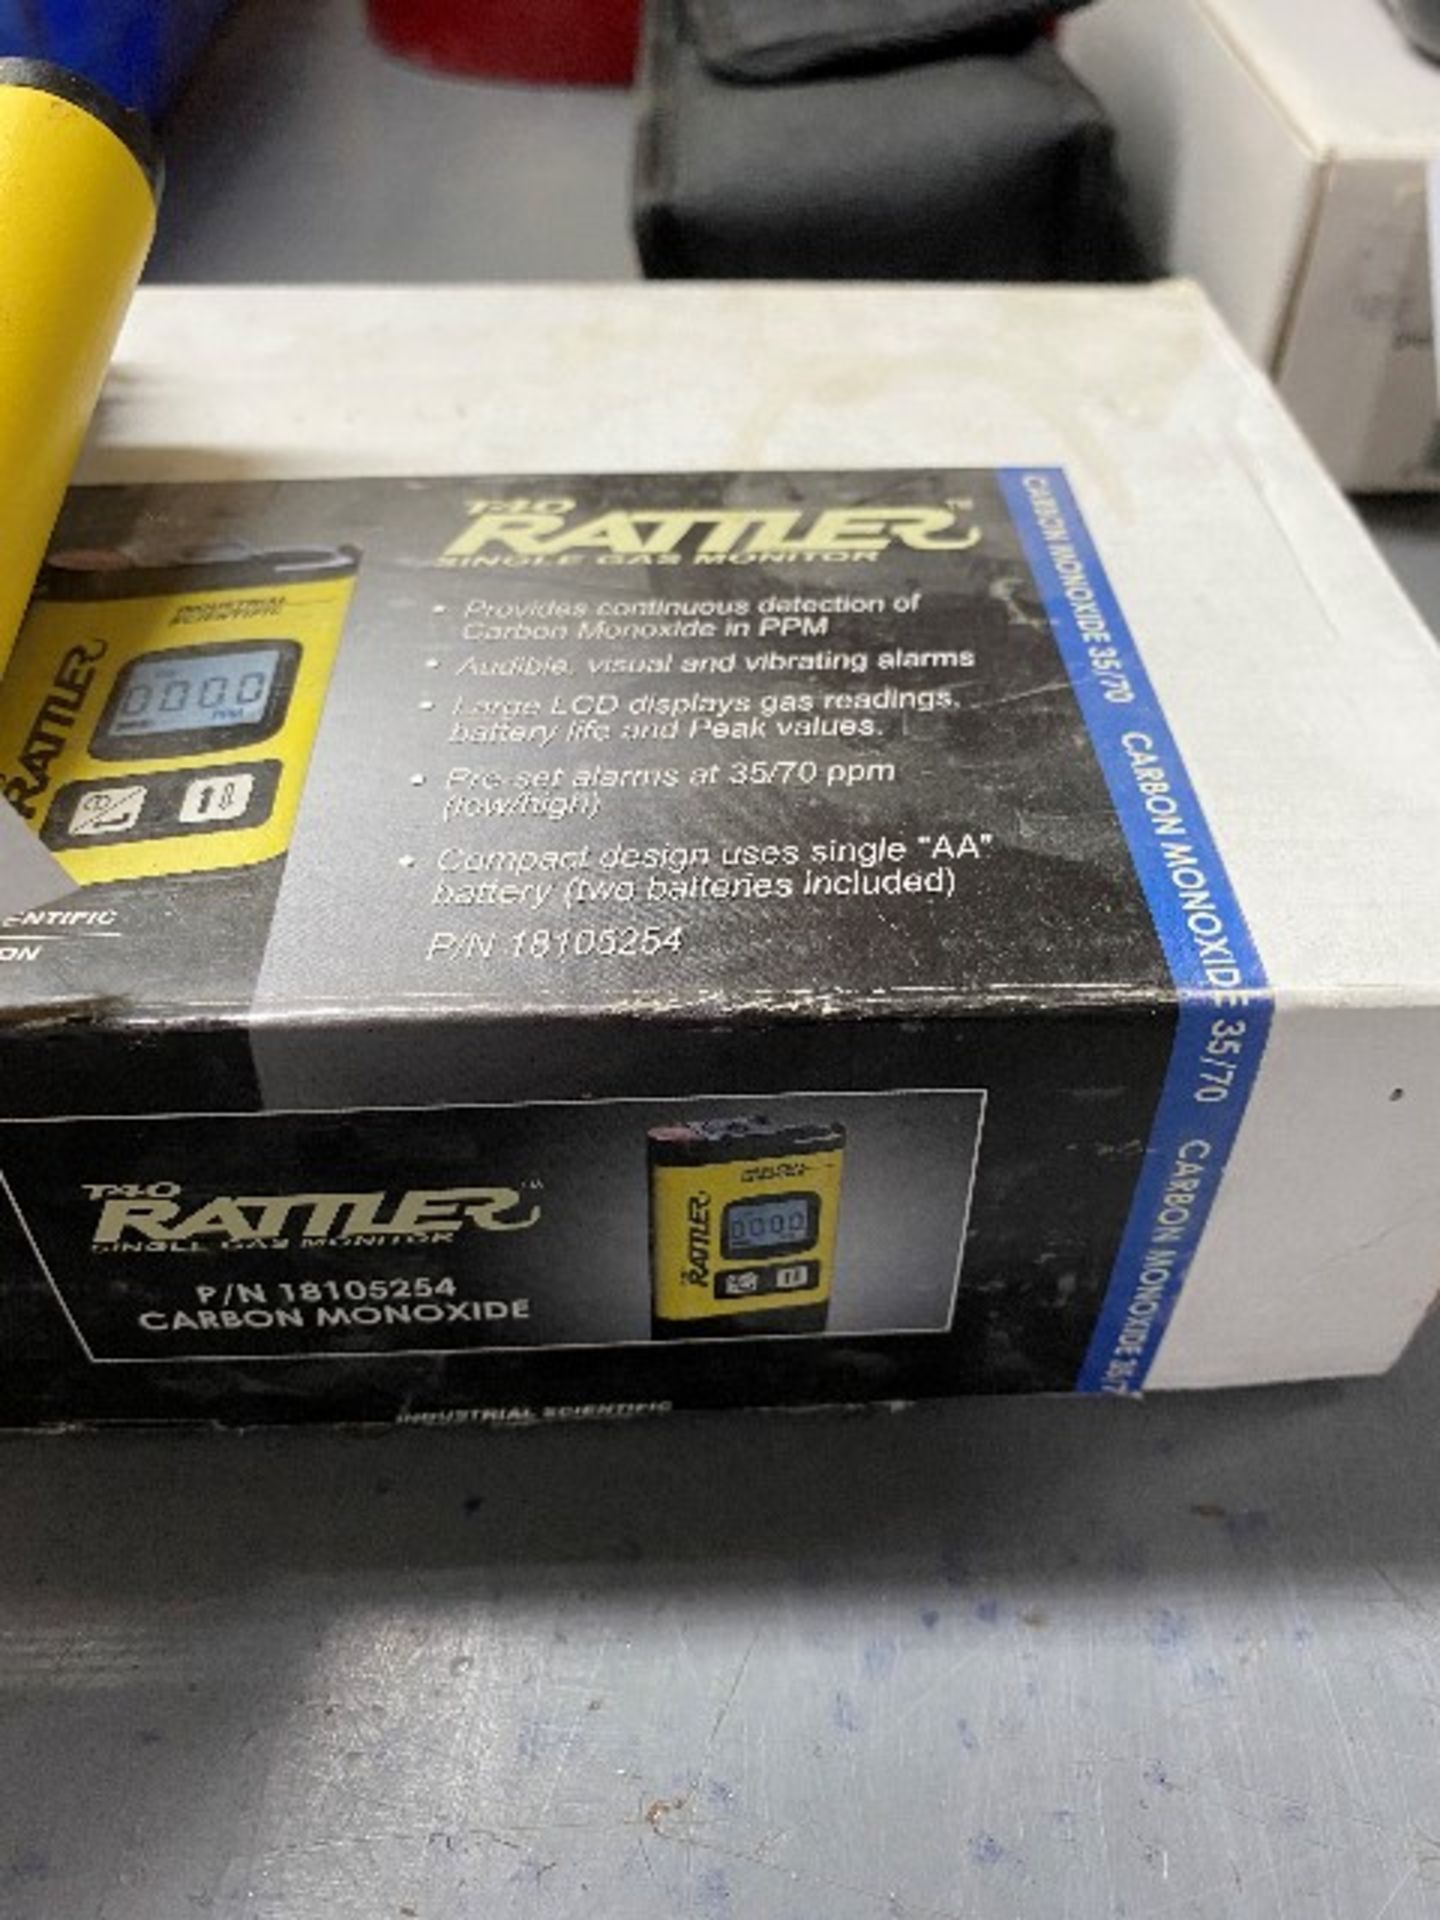 Industrial Scientific T40 Rattler Carbon monoxide detector - Image 2 of 2